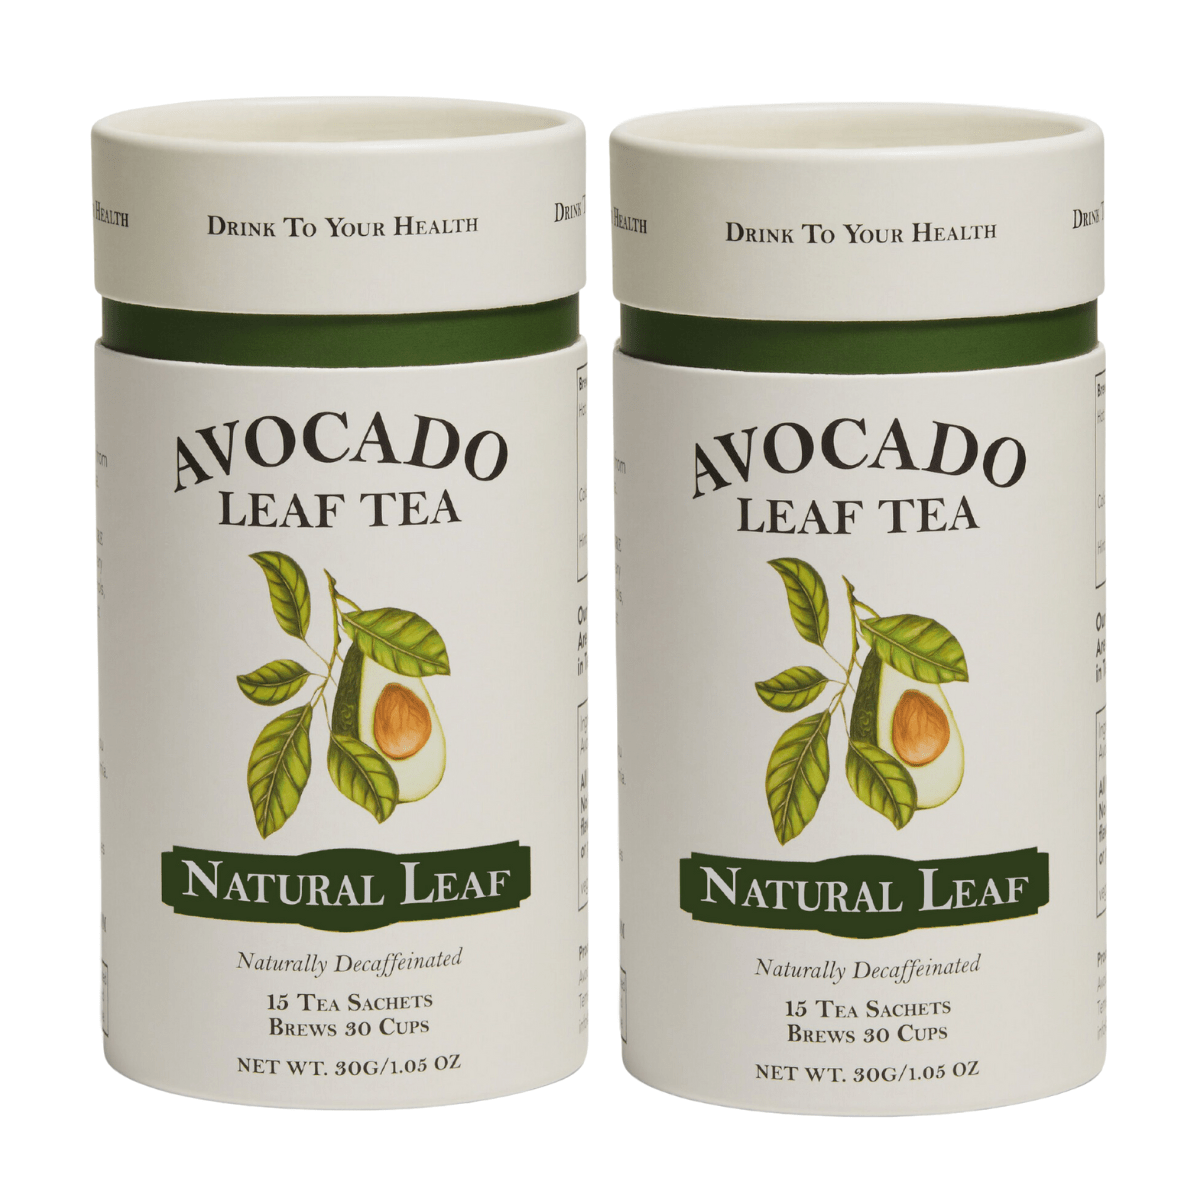 2 Pack Avocado Leaf Tea Natural - Avocado Tea Co., 100% all natural, biodegradable tea sachets, wellness tea